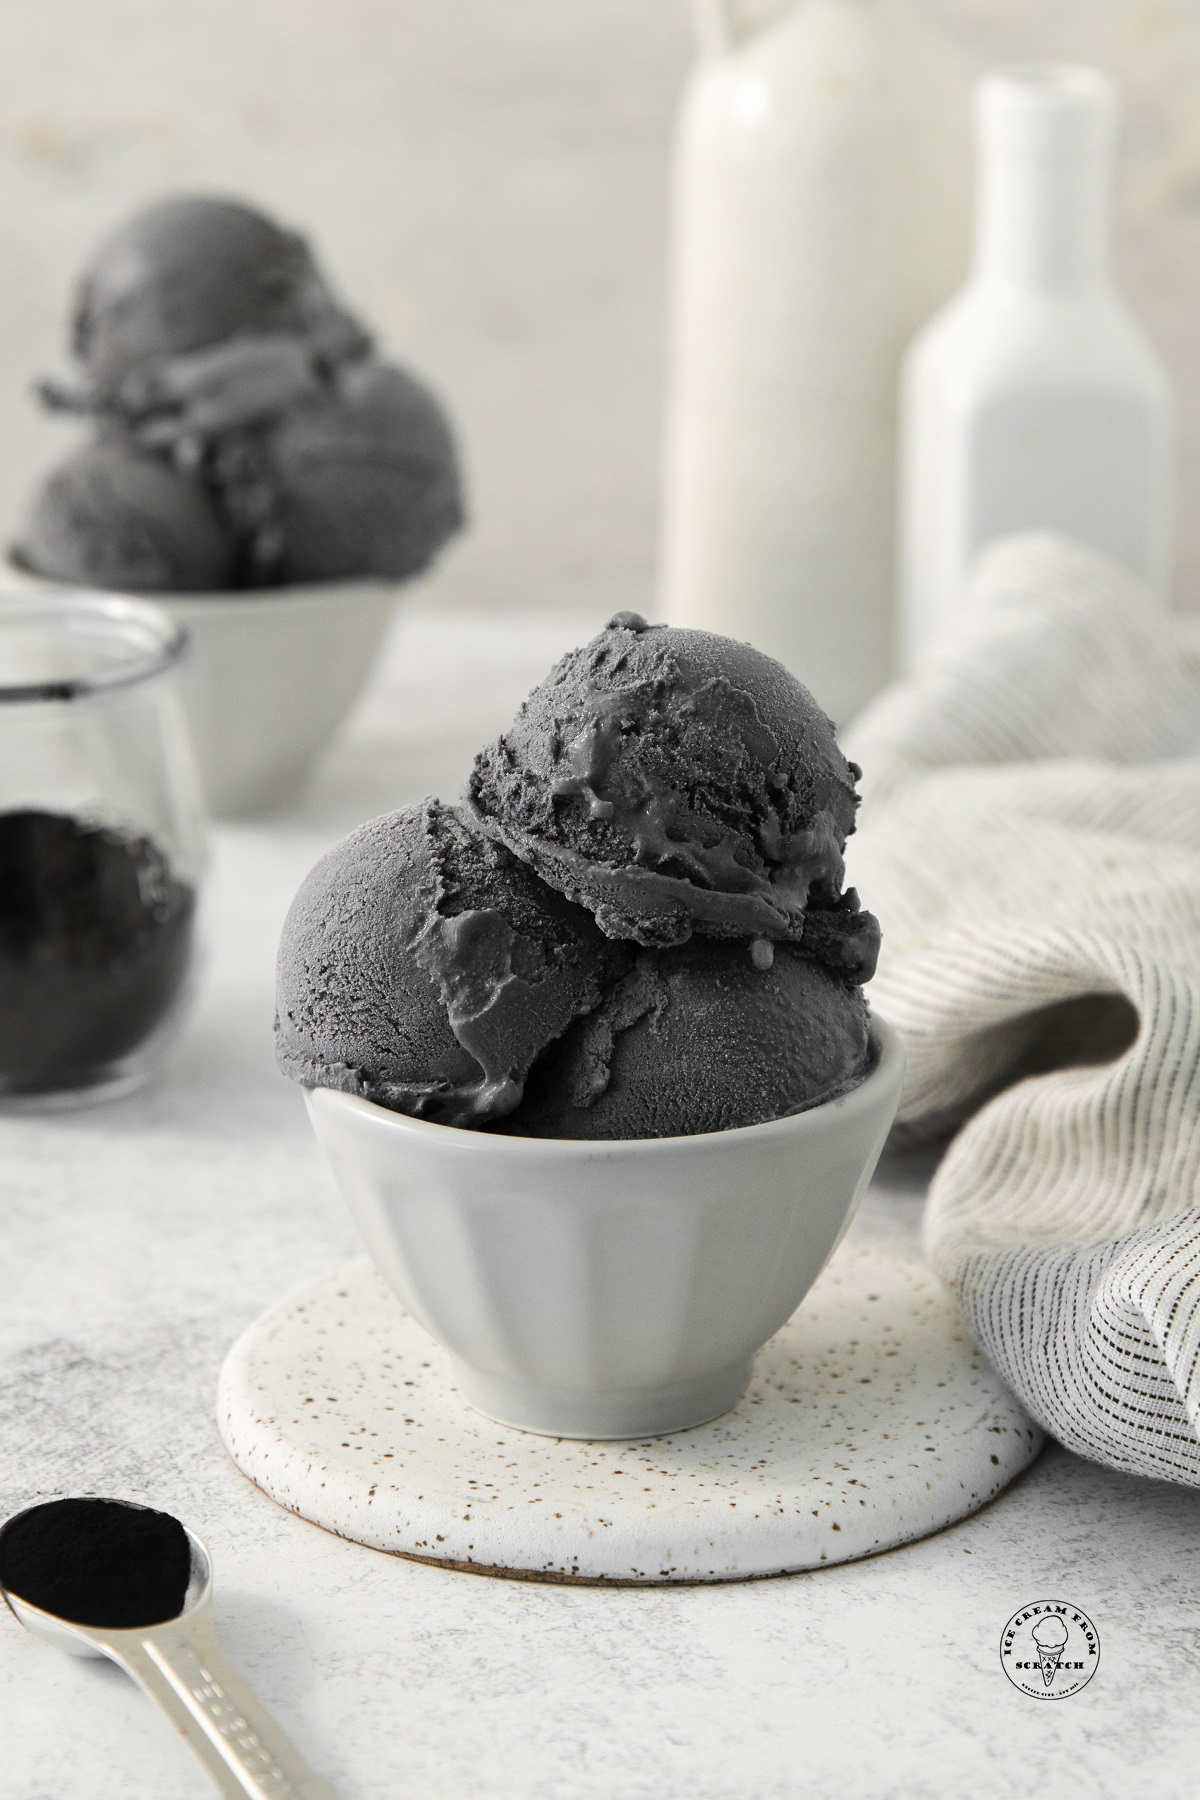 Black ice cream scoops in a white bowl.